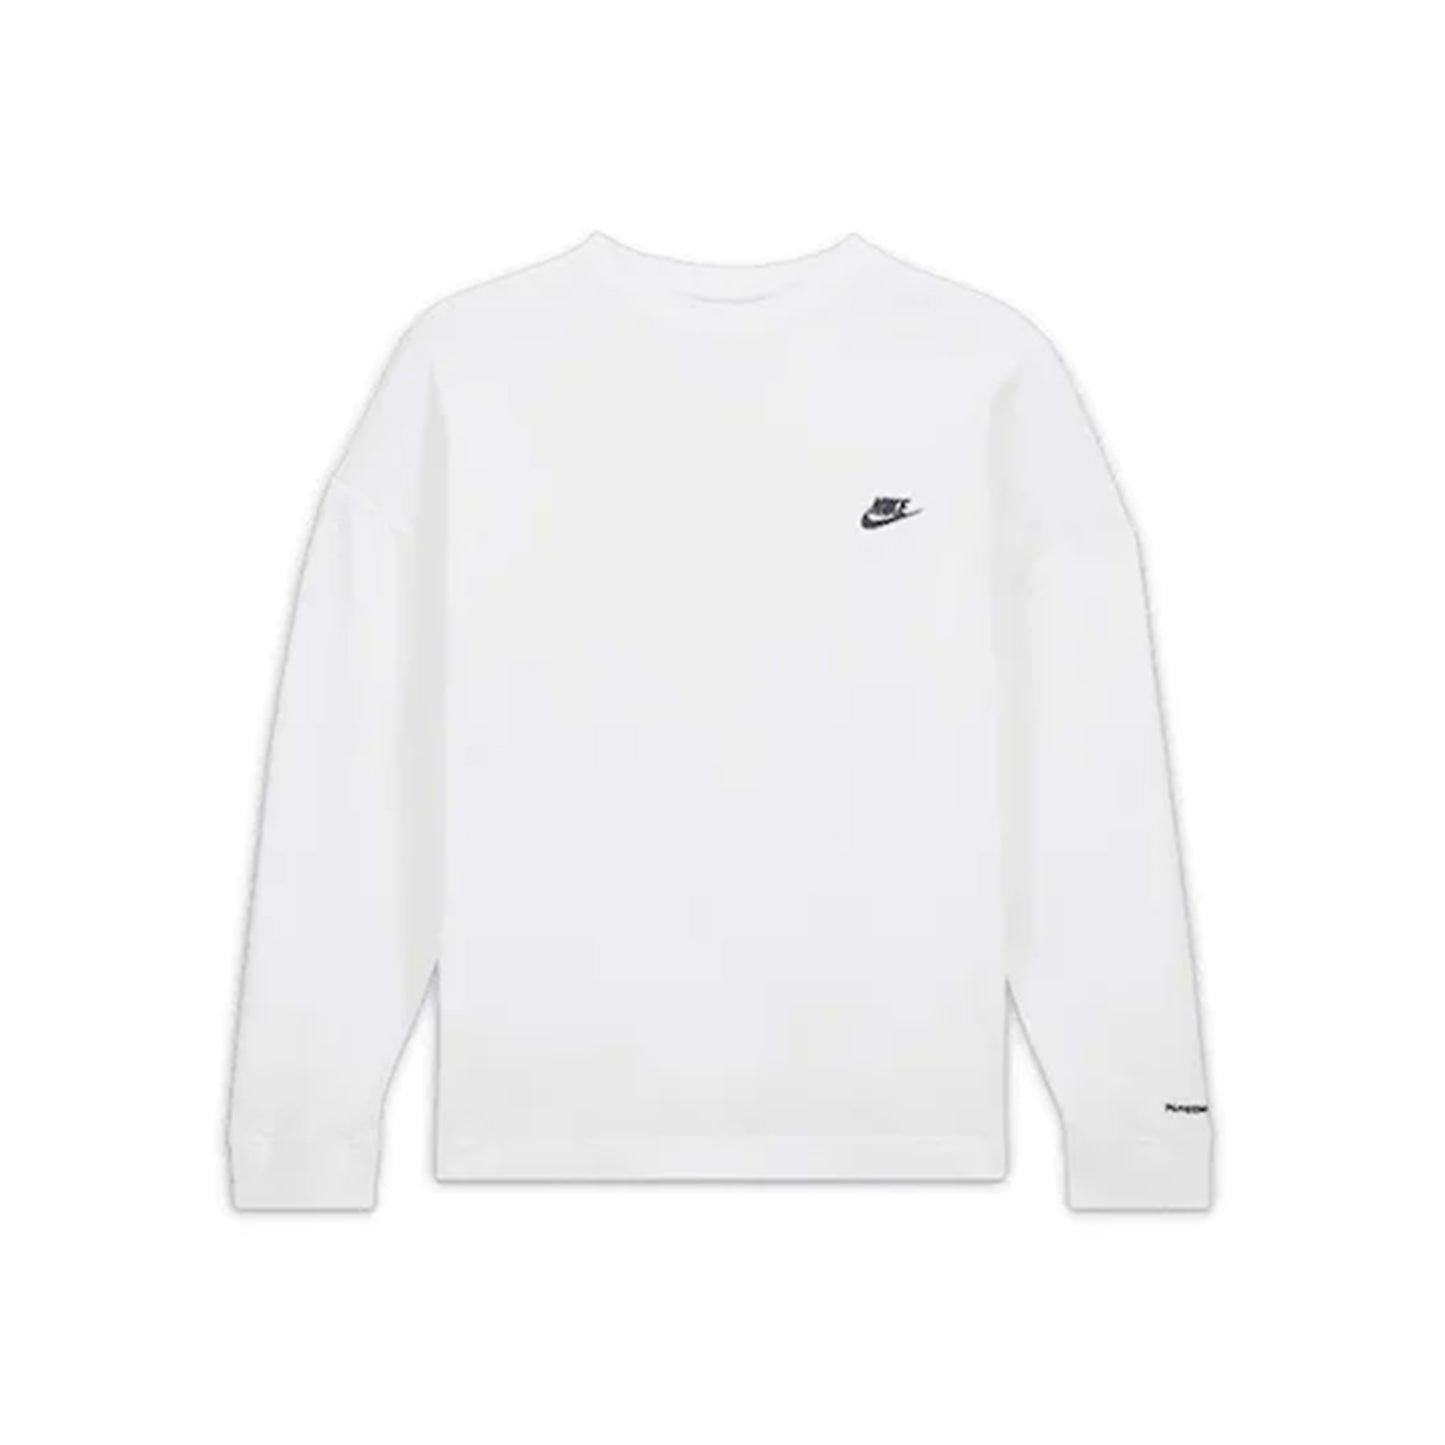 Nike x Peaceminusone G-Dragon Long Sleeve Tee (Asia Sizing) White